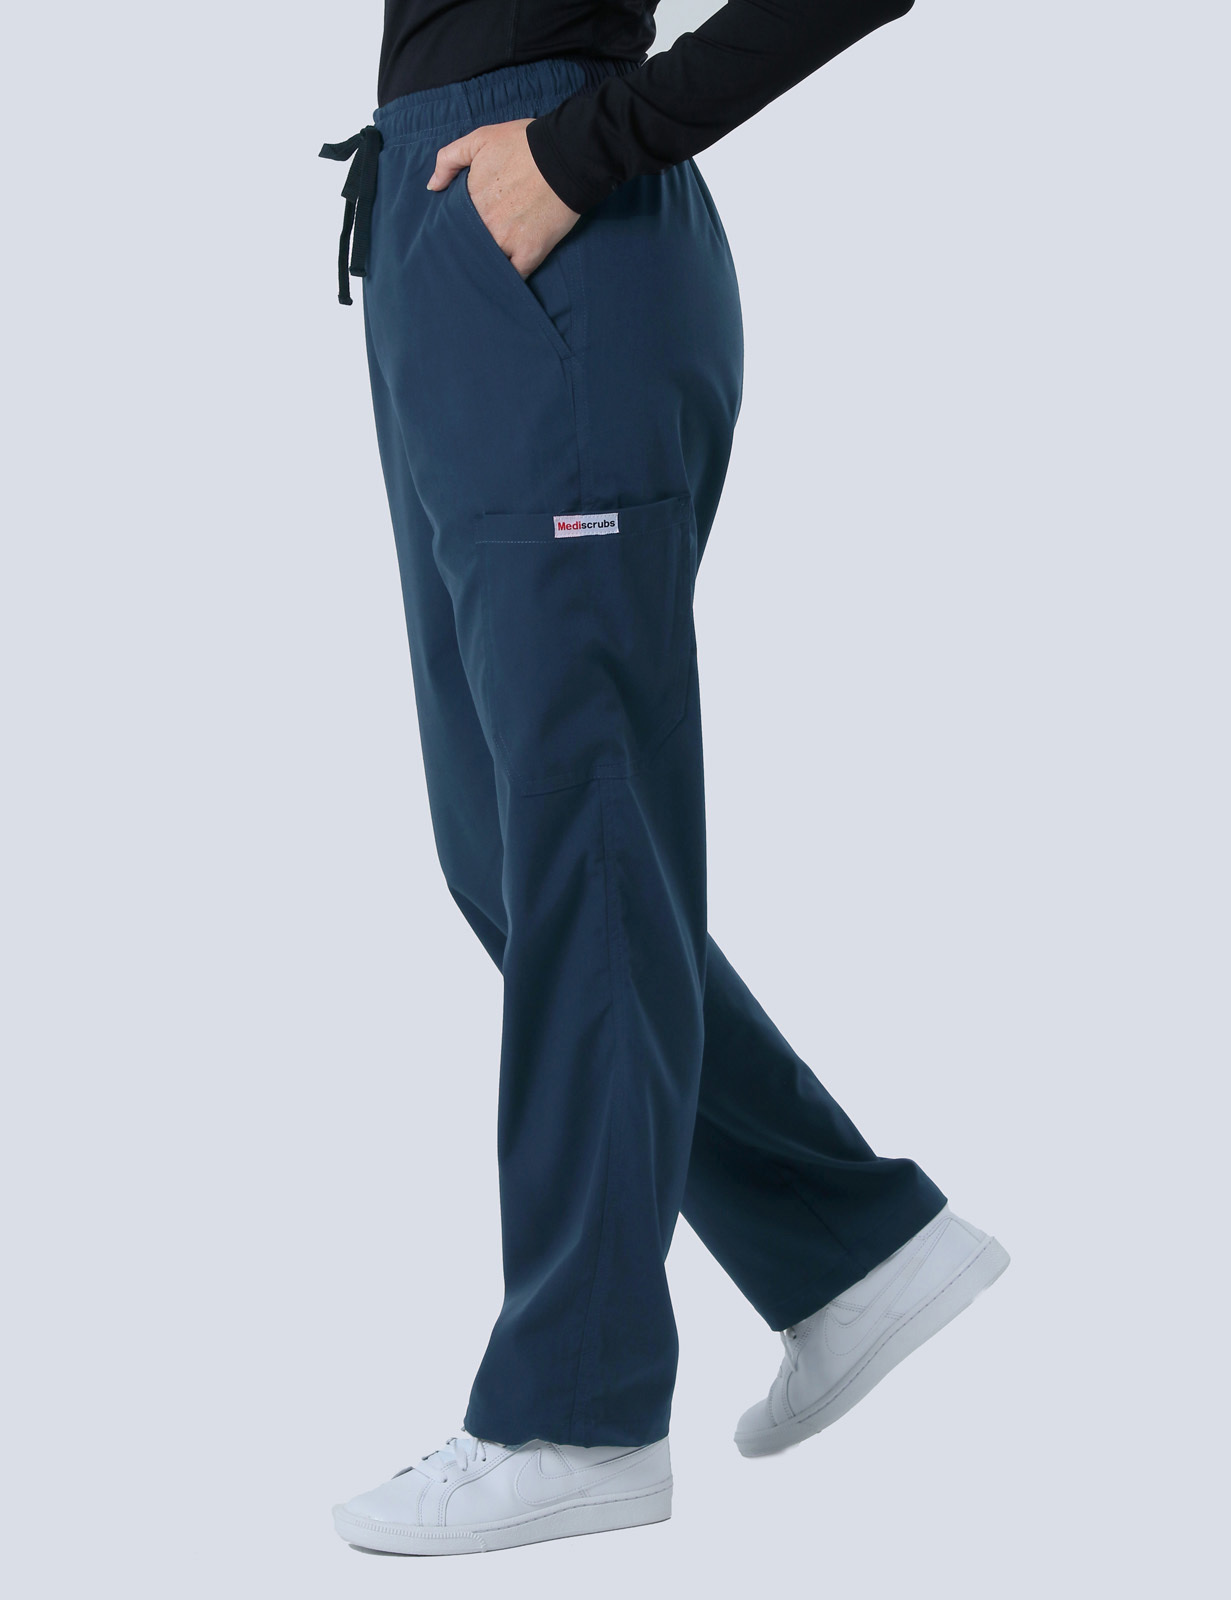 Rockhampton Hospital Emergency Department Enrolled Nurse Uniform Set Bundle (4 Pocket Top and Cargo Pants in Navy + 3 Logos)